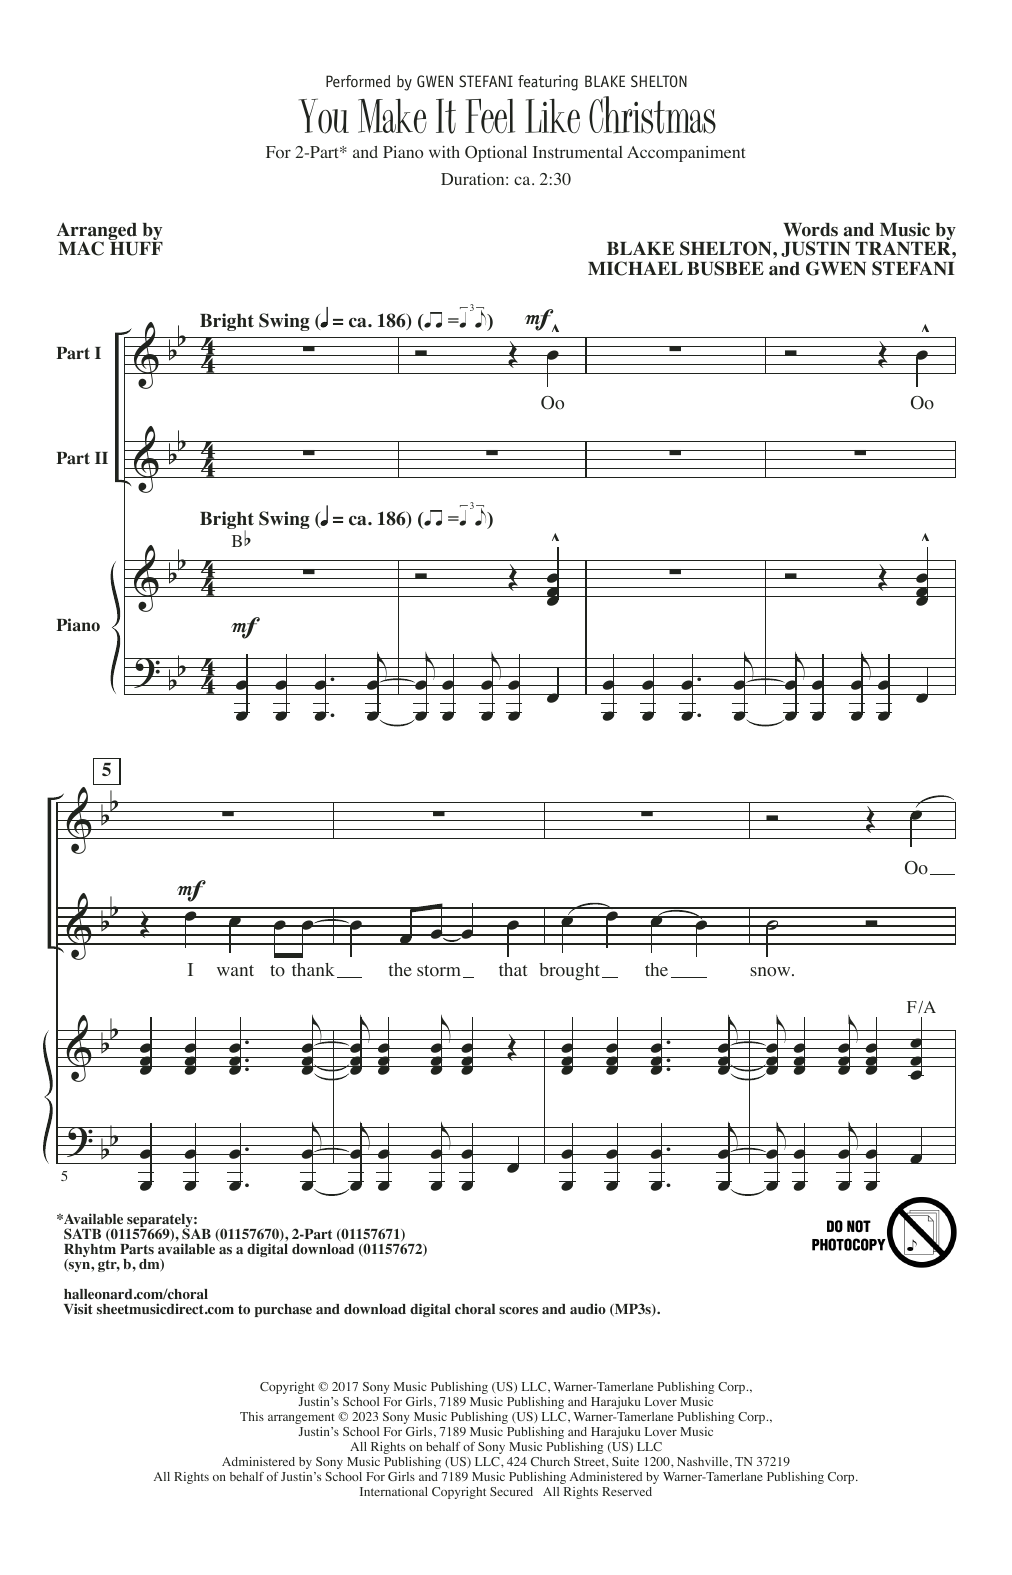 Gwen Stefani featuring Blake Shelton You Make It Feel Like Christmas (arr. Mac Huff) Sheet Music Notes & Chords for 2-Part Choir - Download or Print PDF